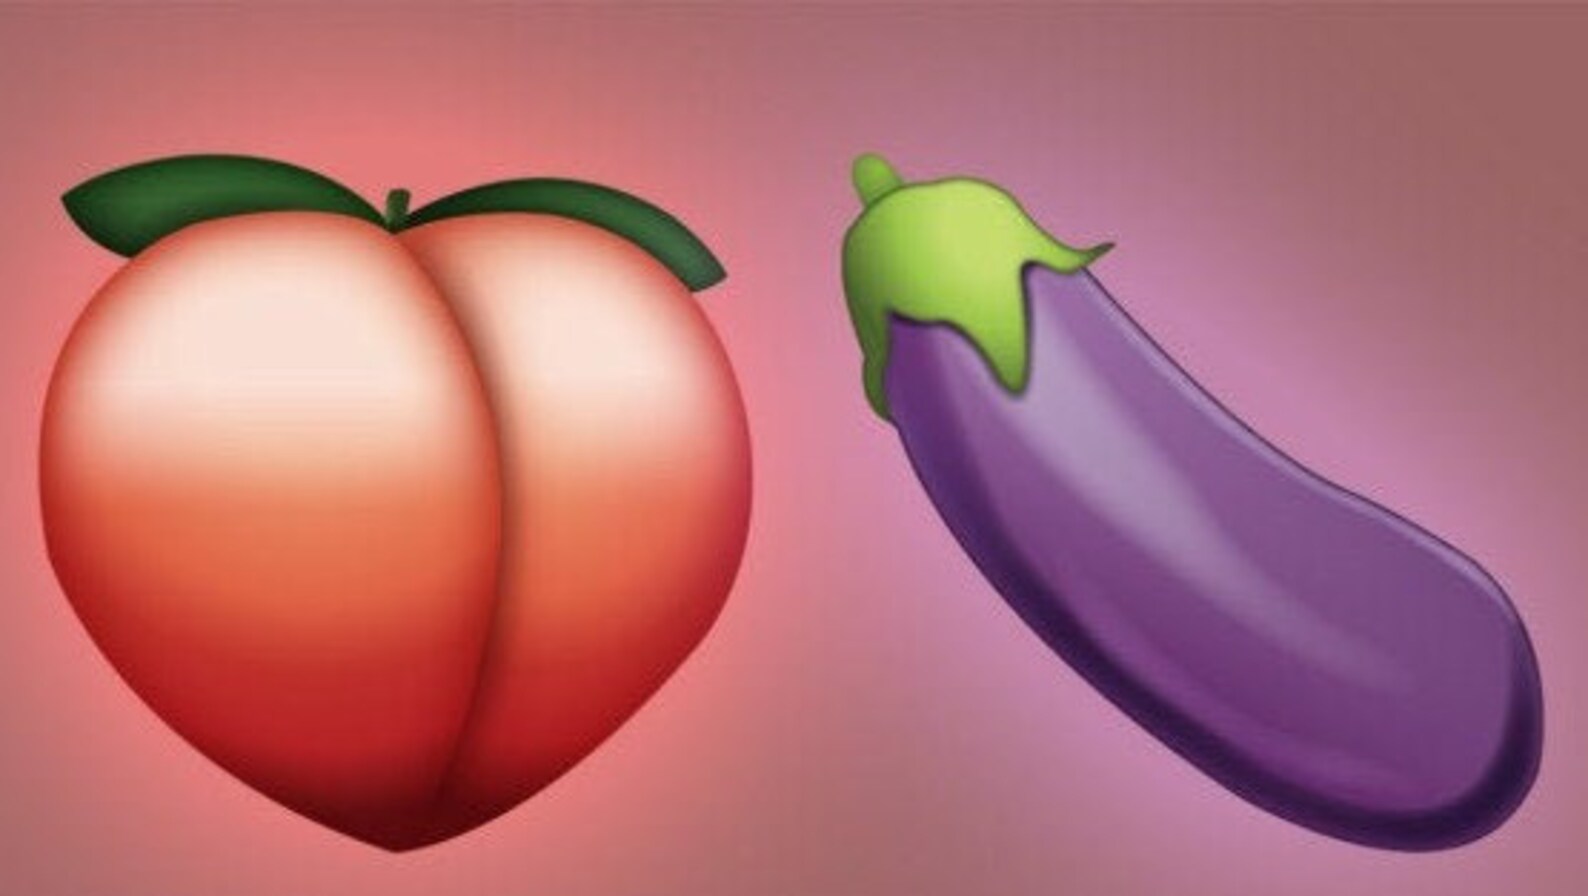 Eggplant and peach meme